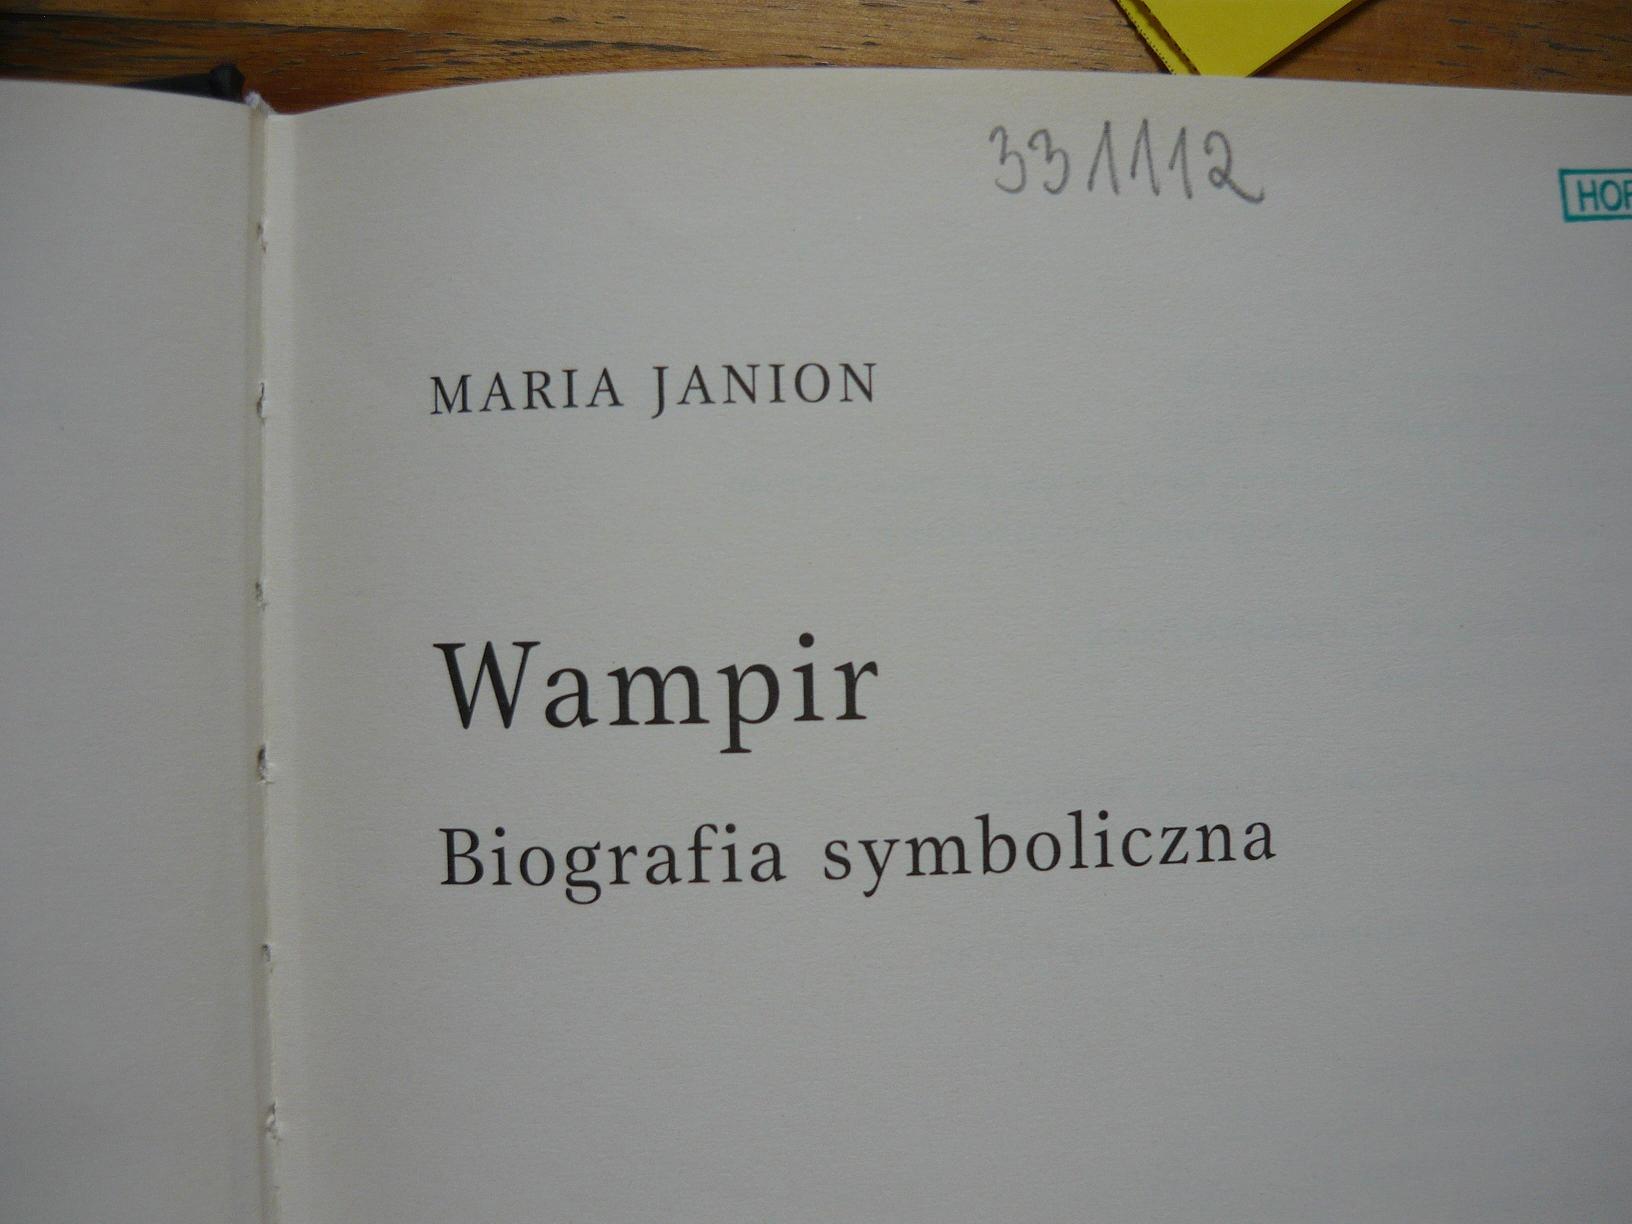 Maria Janion, Wampir. Biografia symboliczna - P1010204.JPG